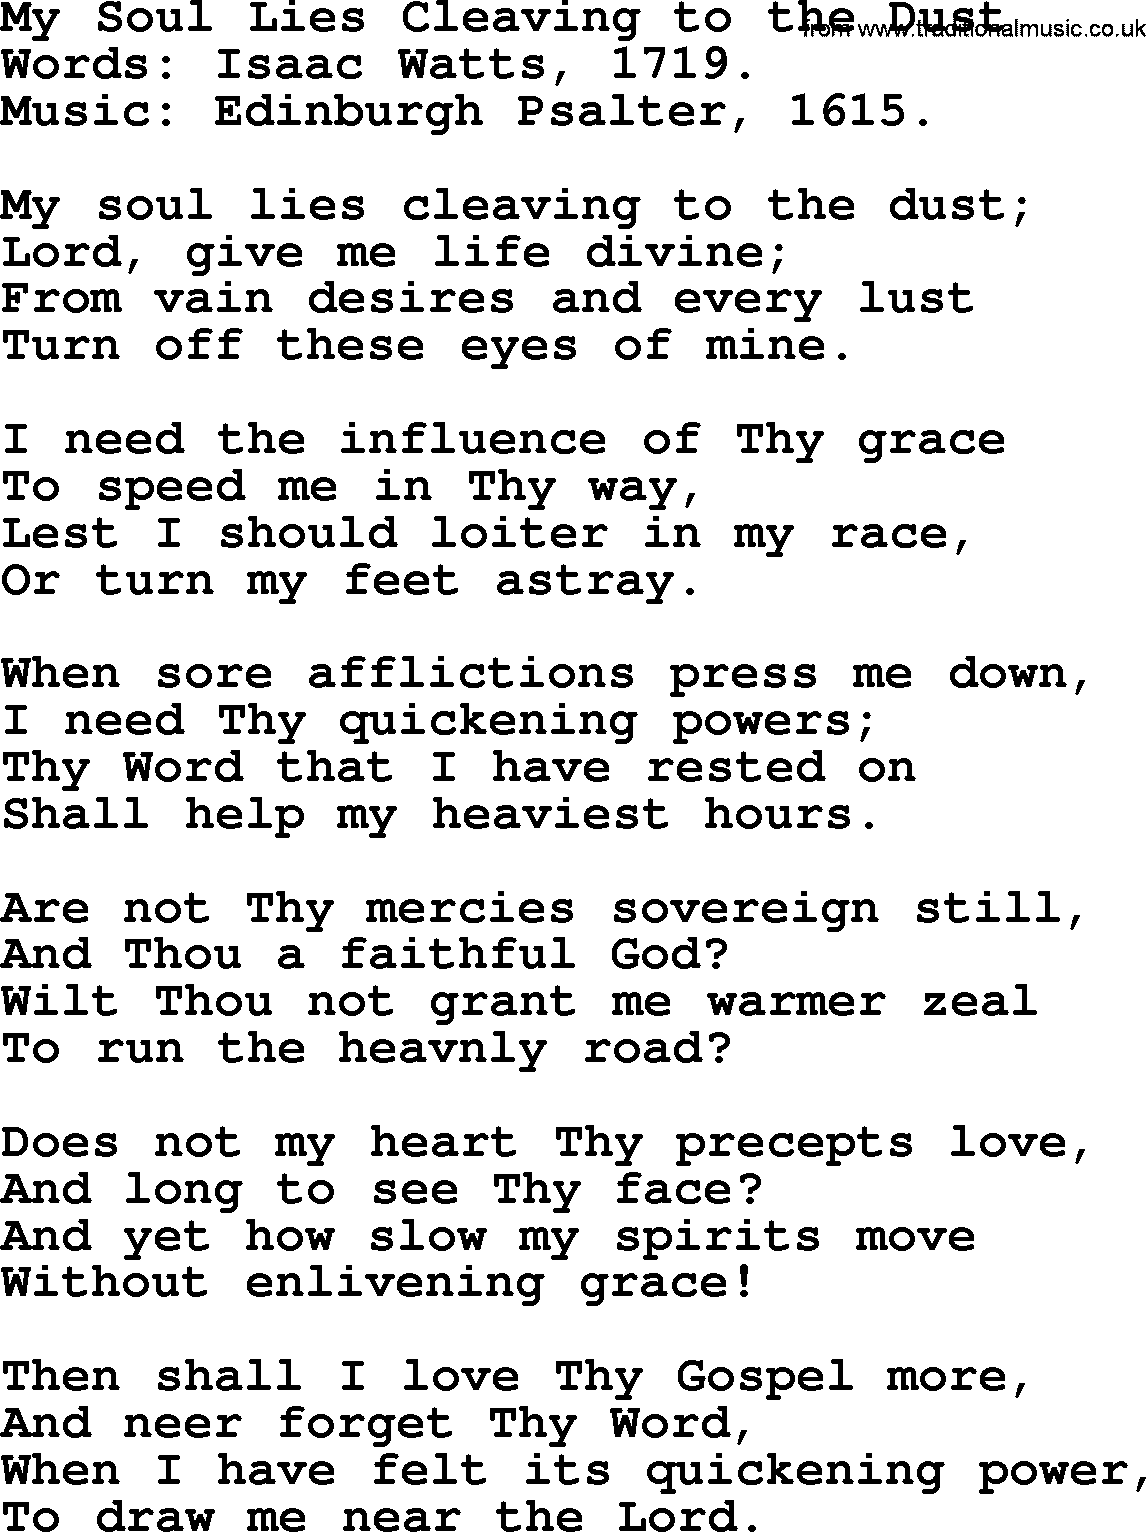 Isaac Watts Christian hymn: My Soul Lies Cleaving to the Dust- lyricss